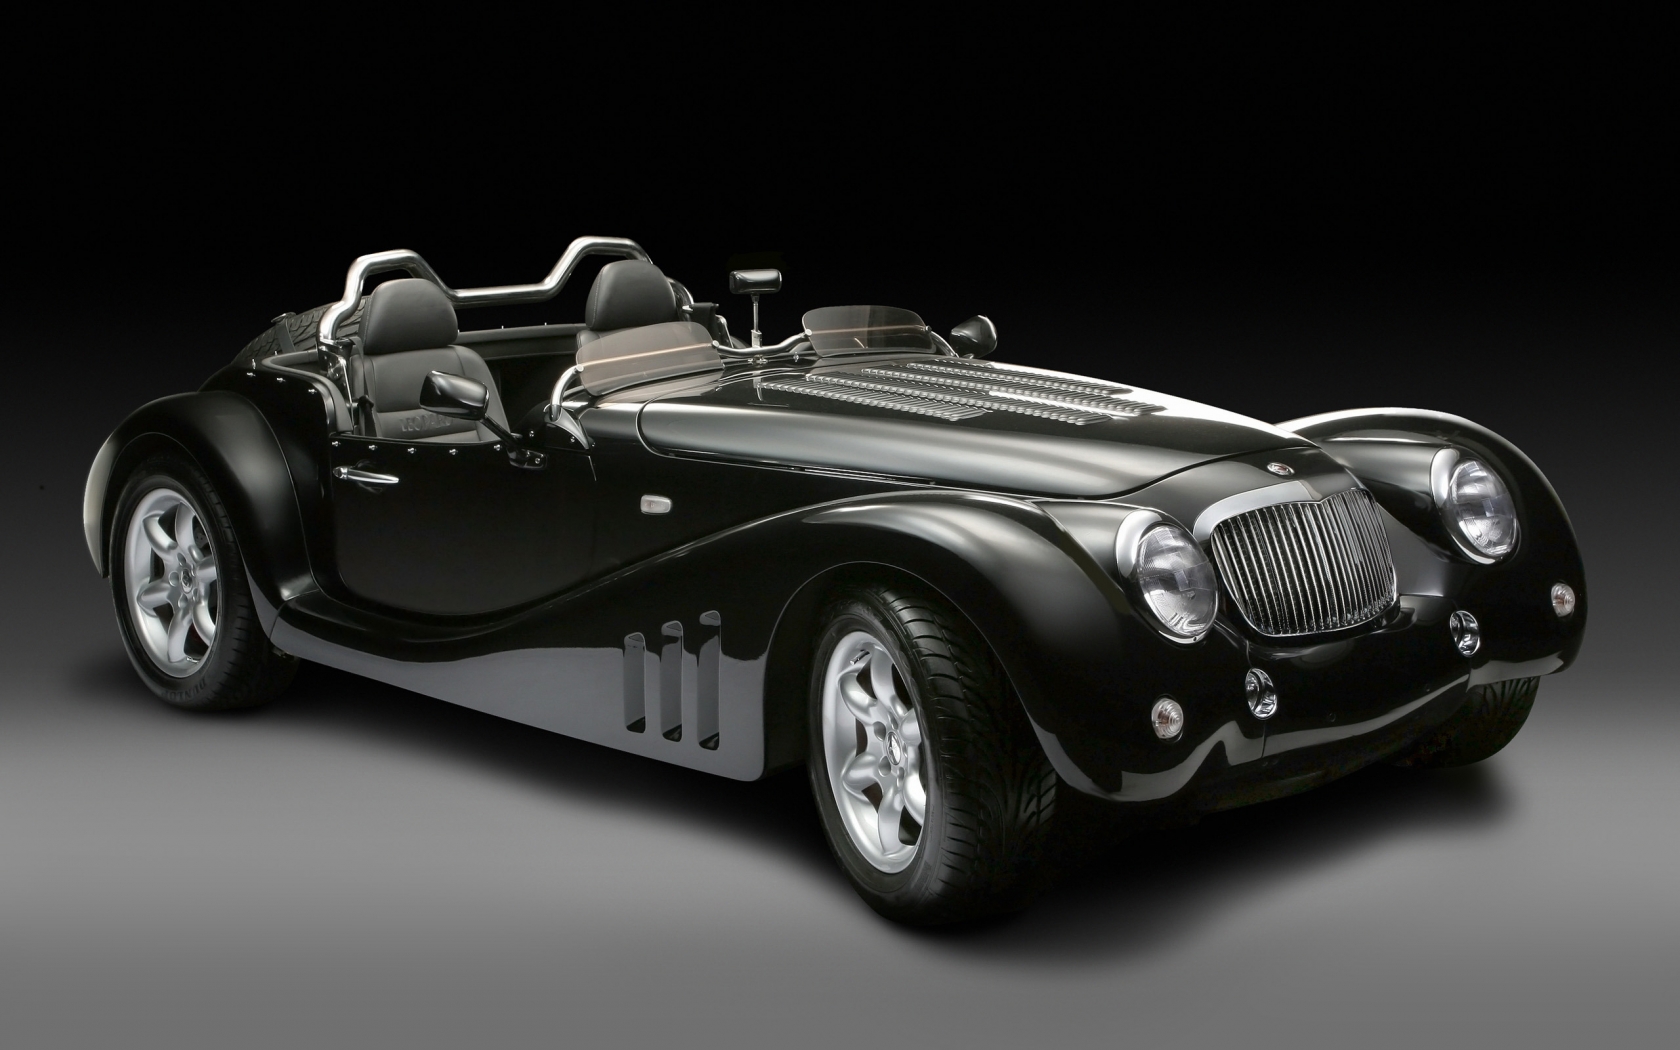 2013 Leopard Roadster Studio for 1680 x 1050 widescreen resolution